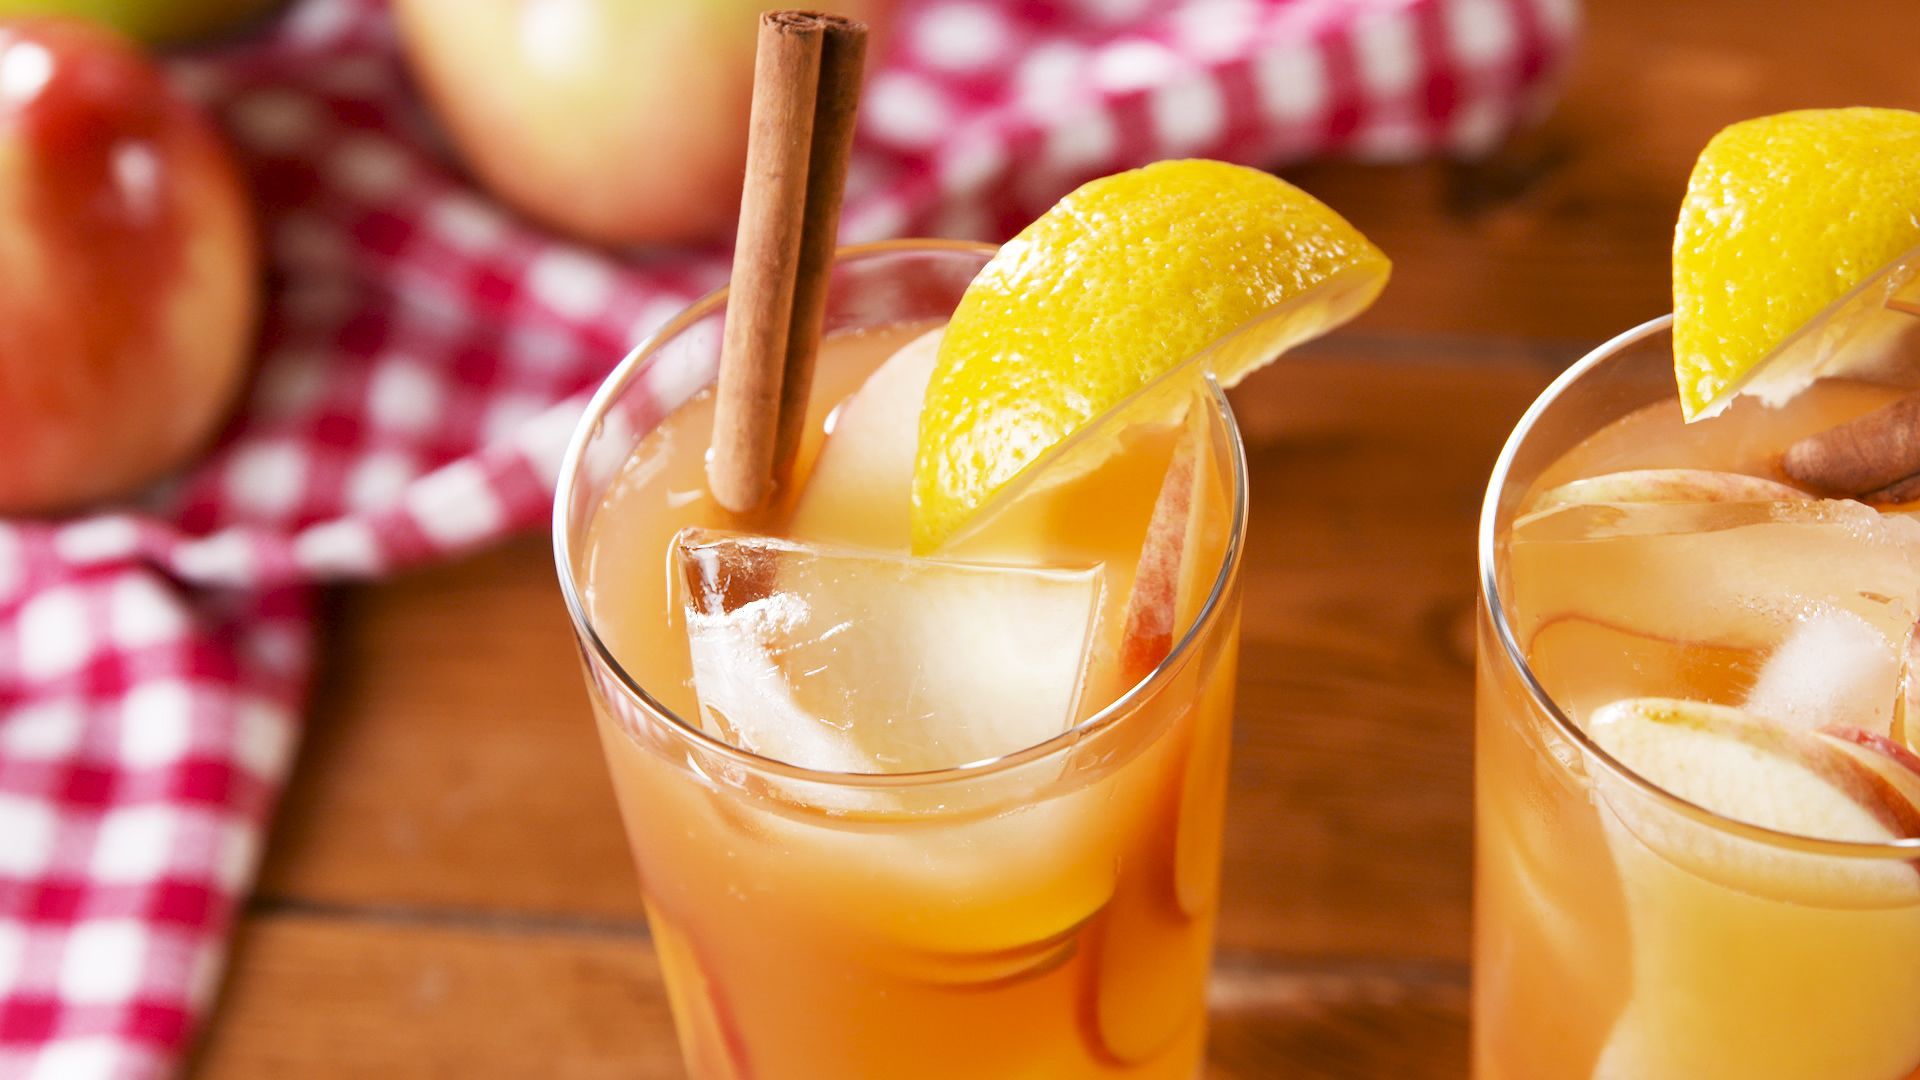 Apple Cider Long Island Iced Tea Recipe to Make Apple Cider